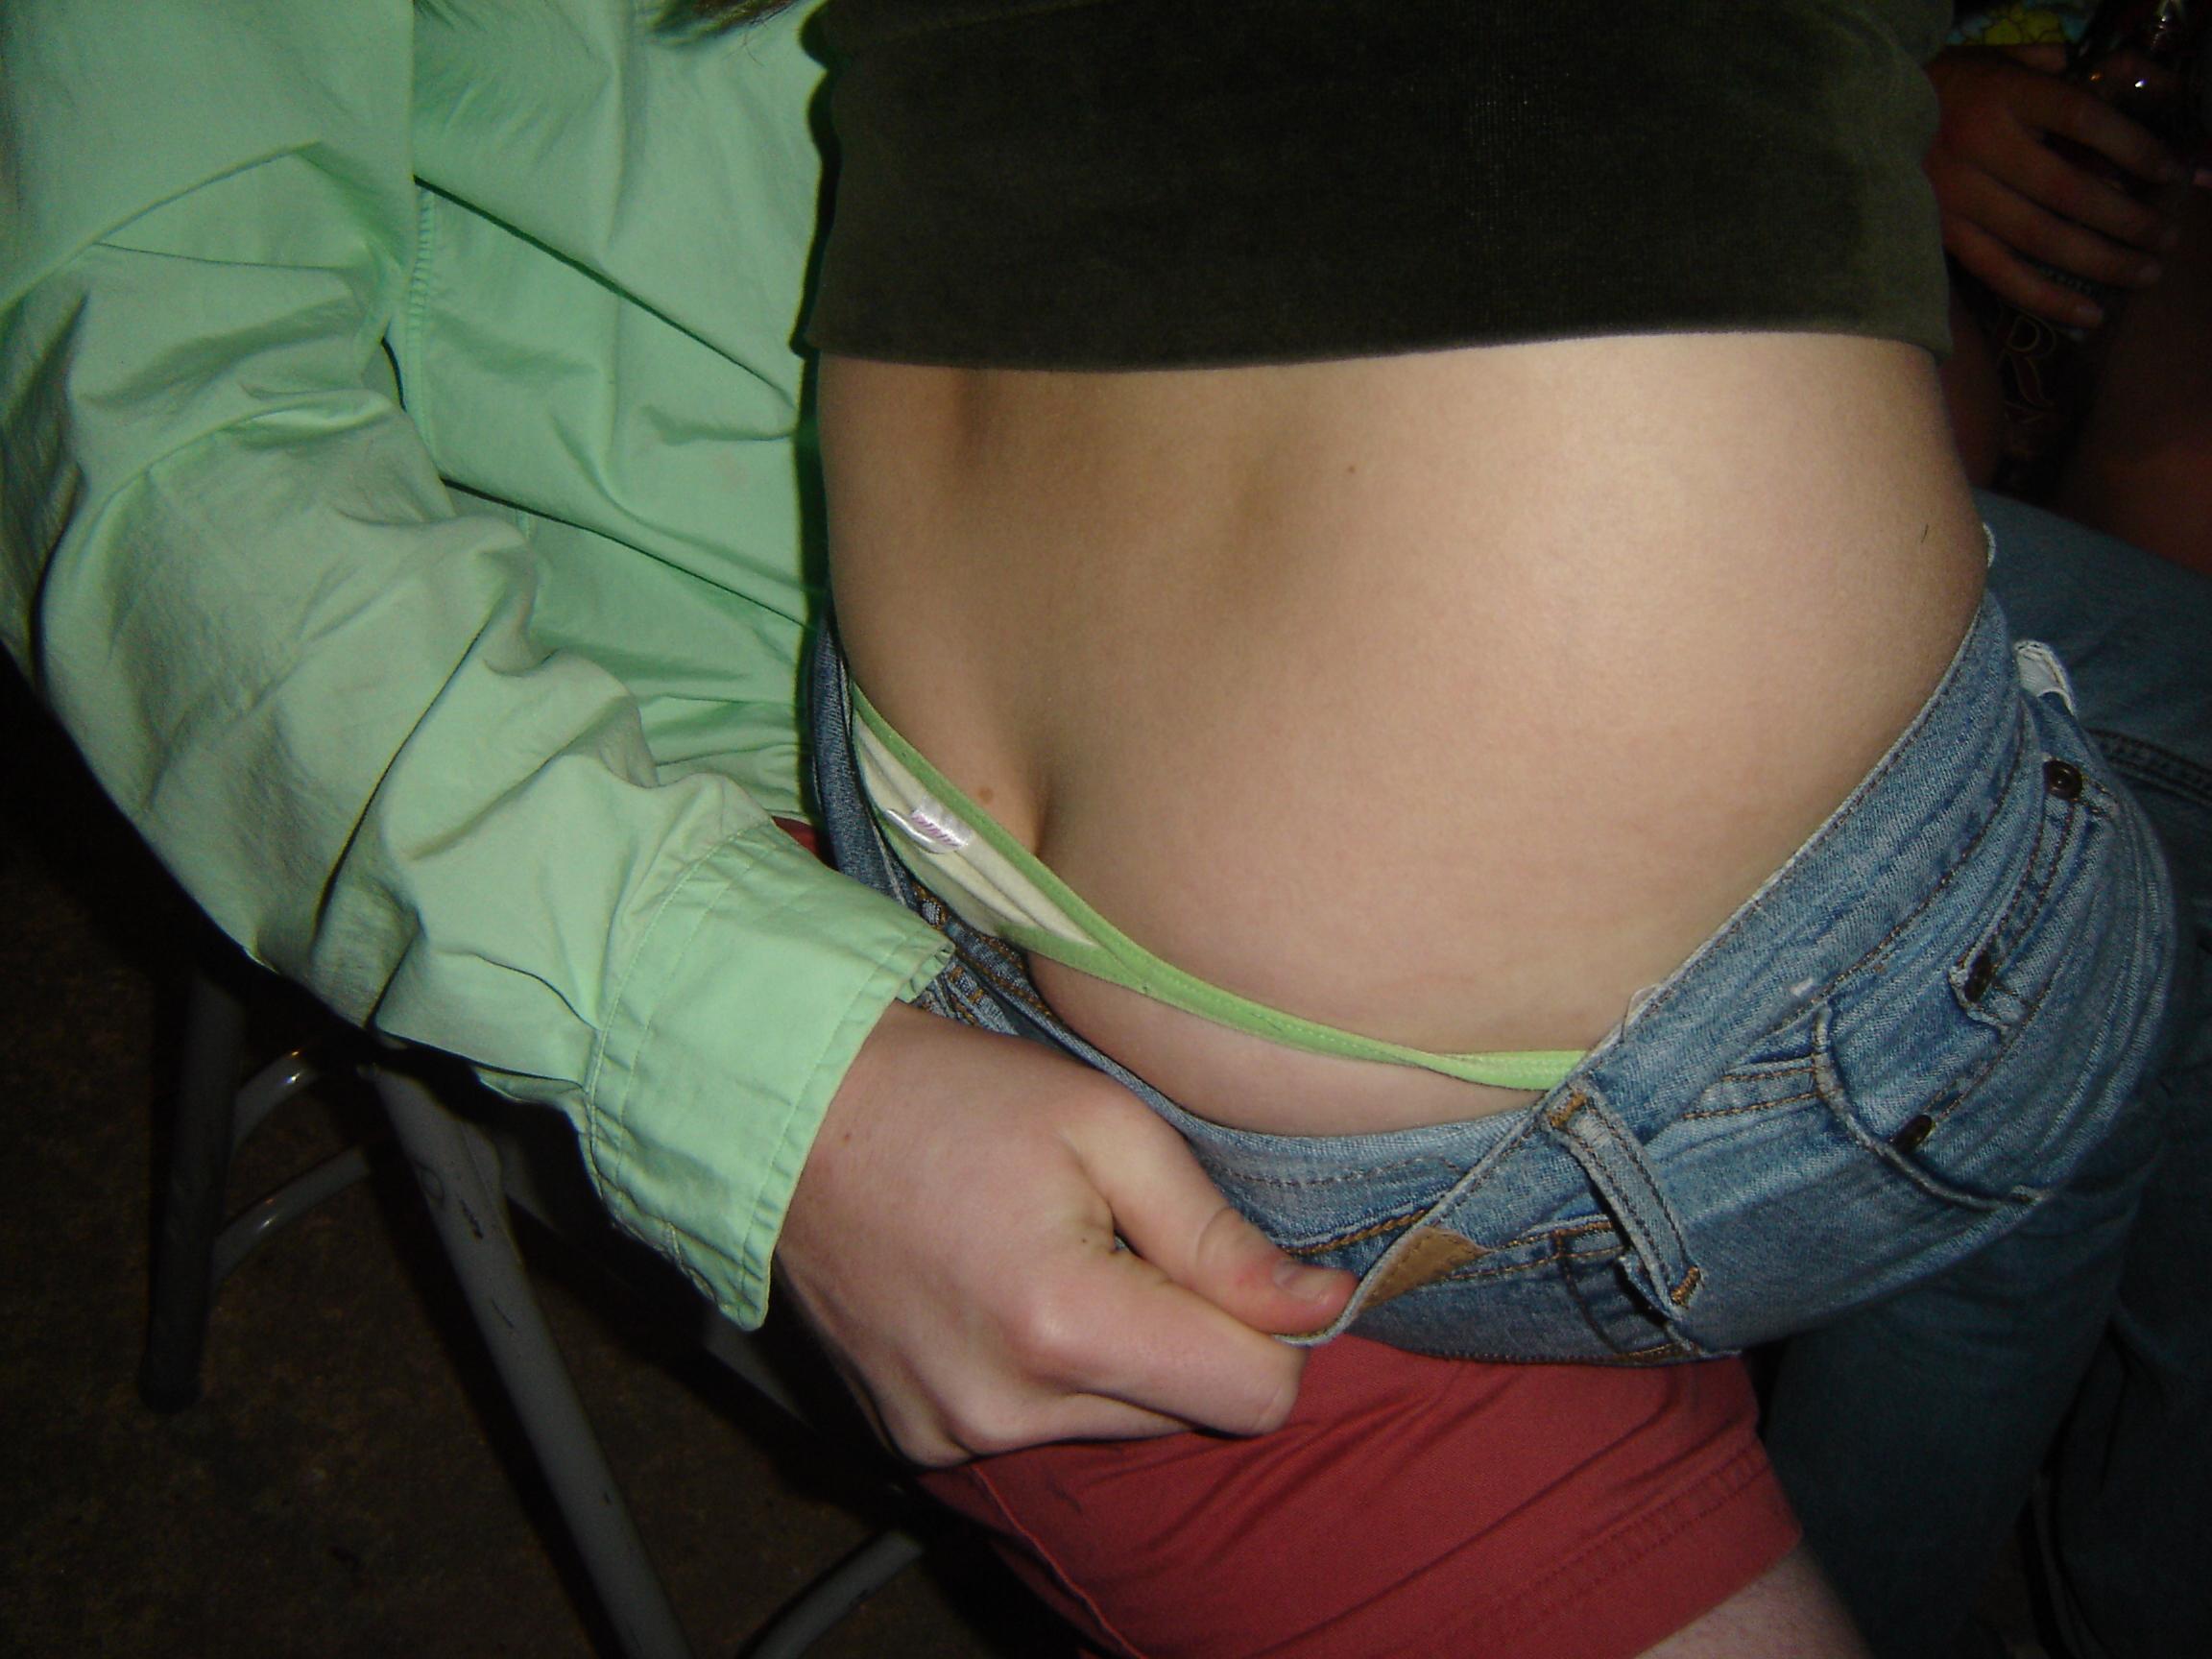 Voyeur cams caught girls-next-door showing off their thongs pic